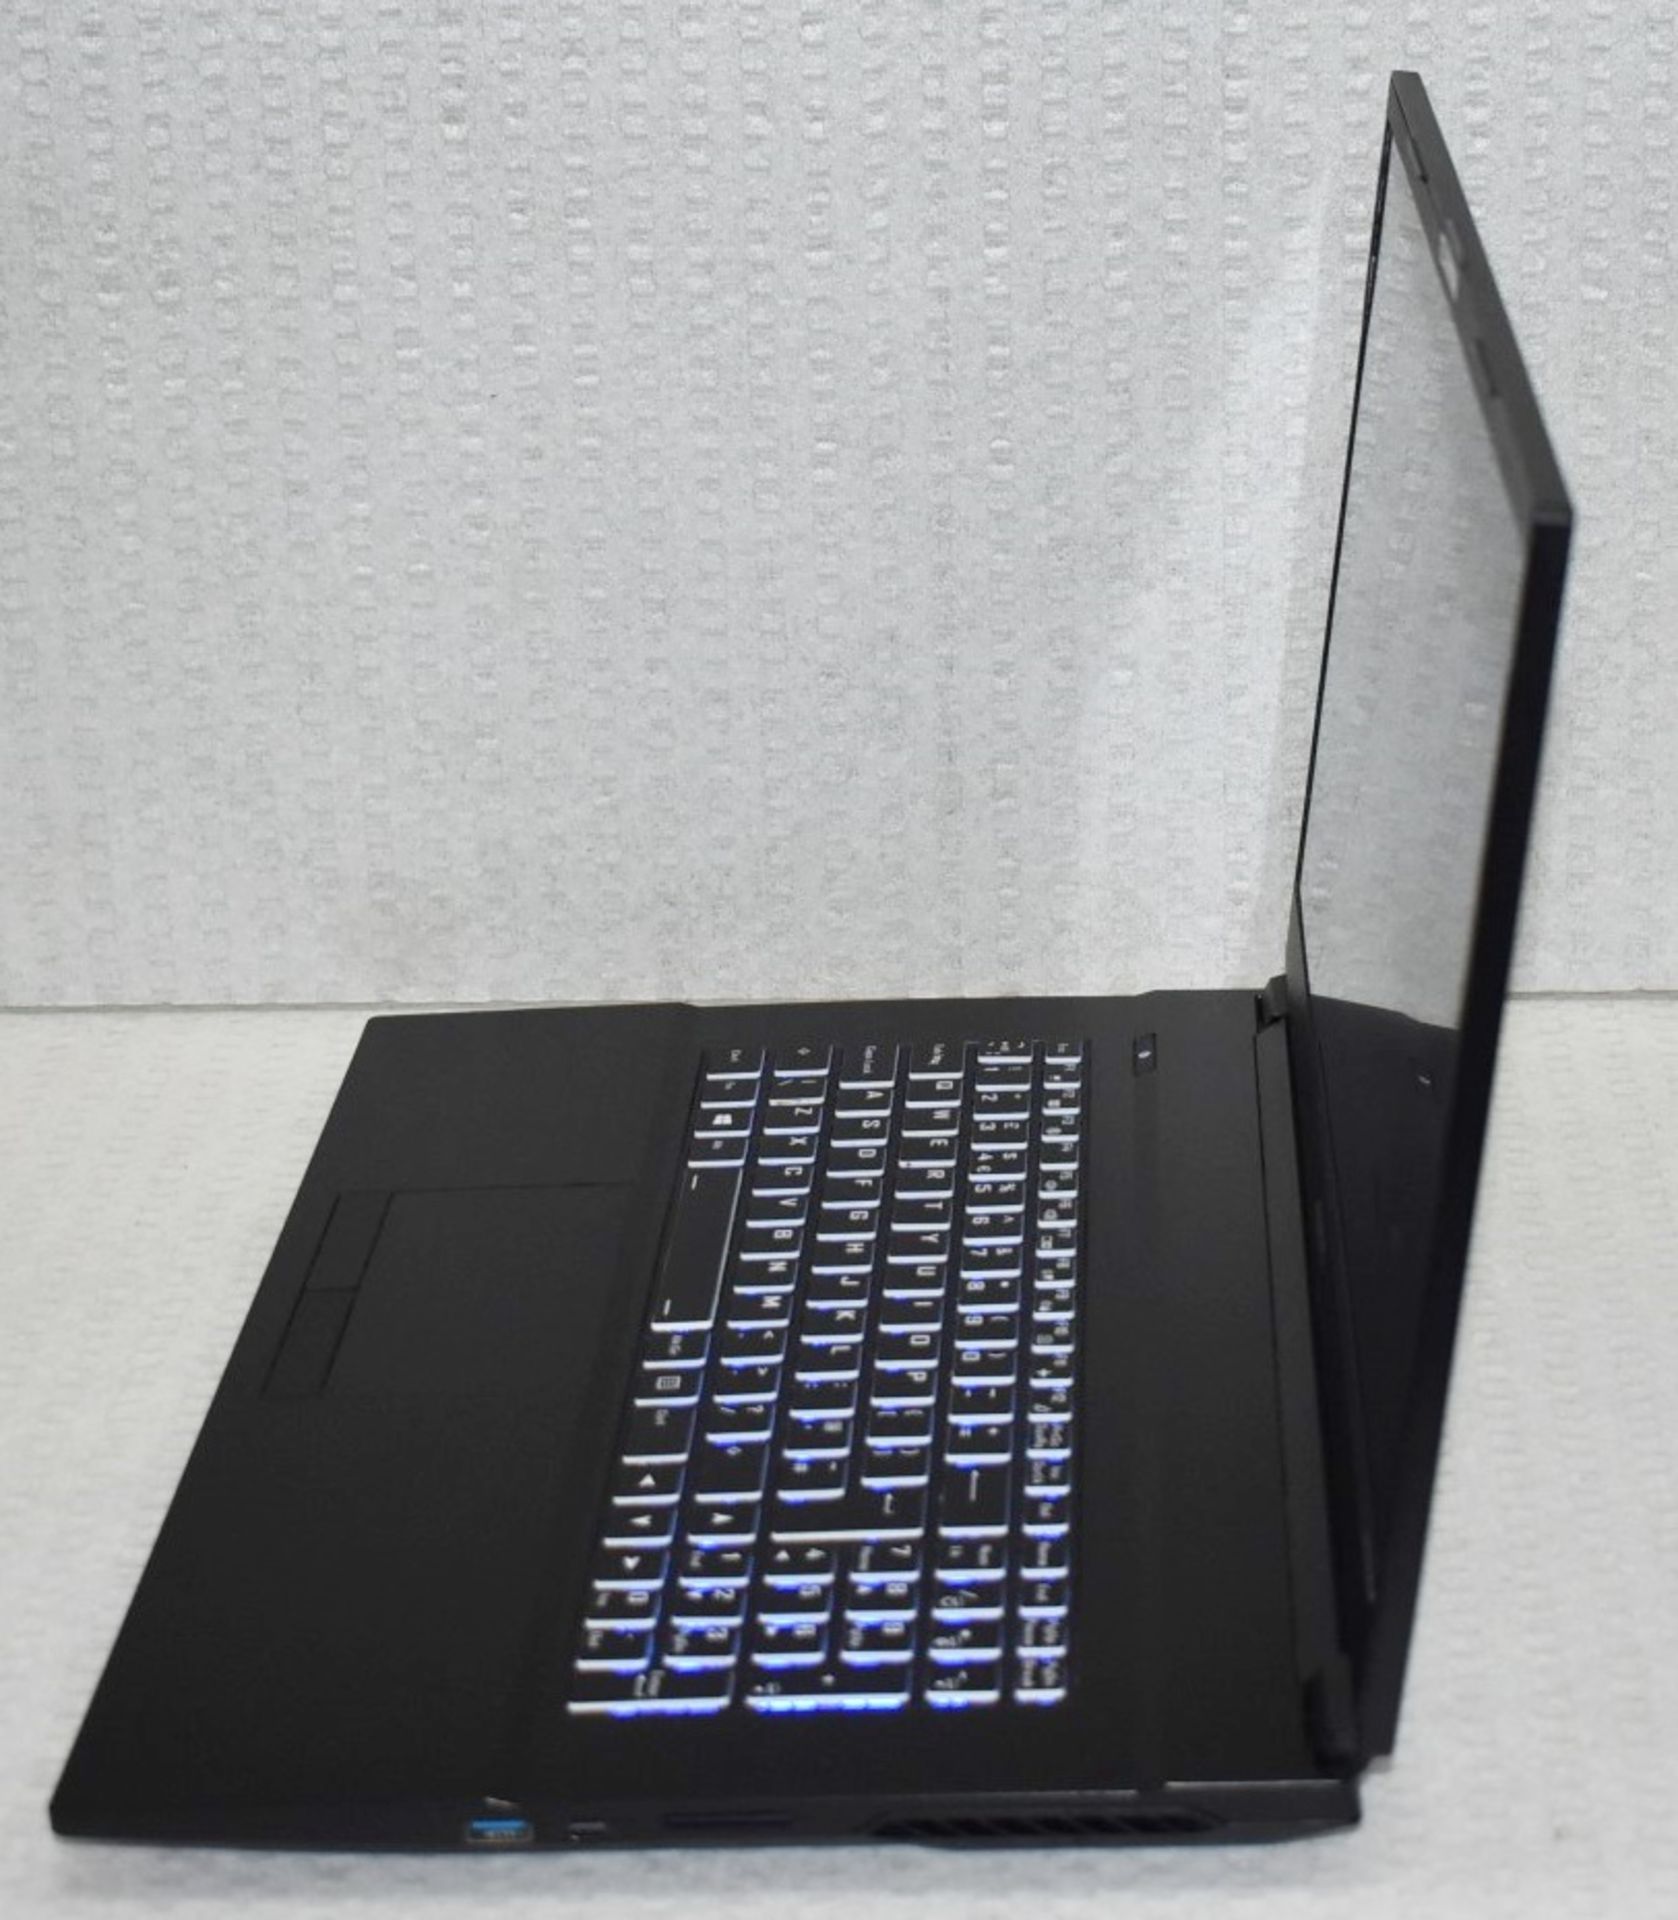 1 x Gigabyte Aorus 17.3 FHD Gaming Laptop - i7-10750H CPU, 16gb RAM, 500gb SSD. RTX2060 6gb Graphics - Image 6 of 37